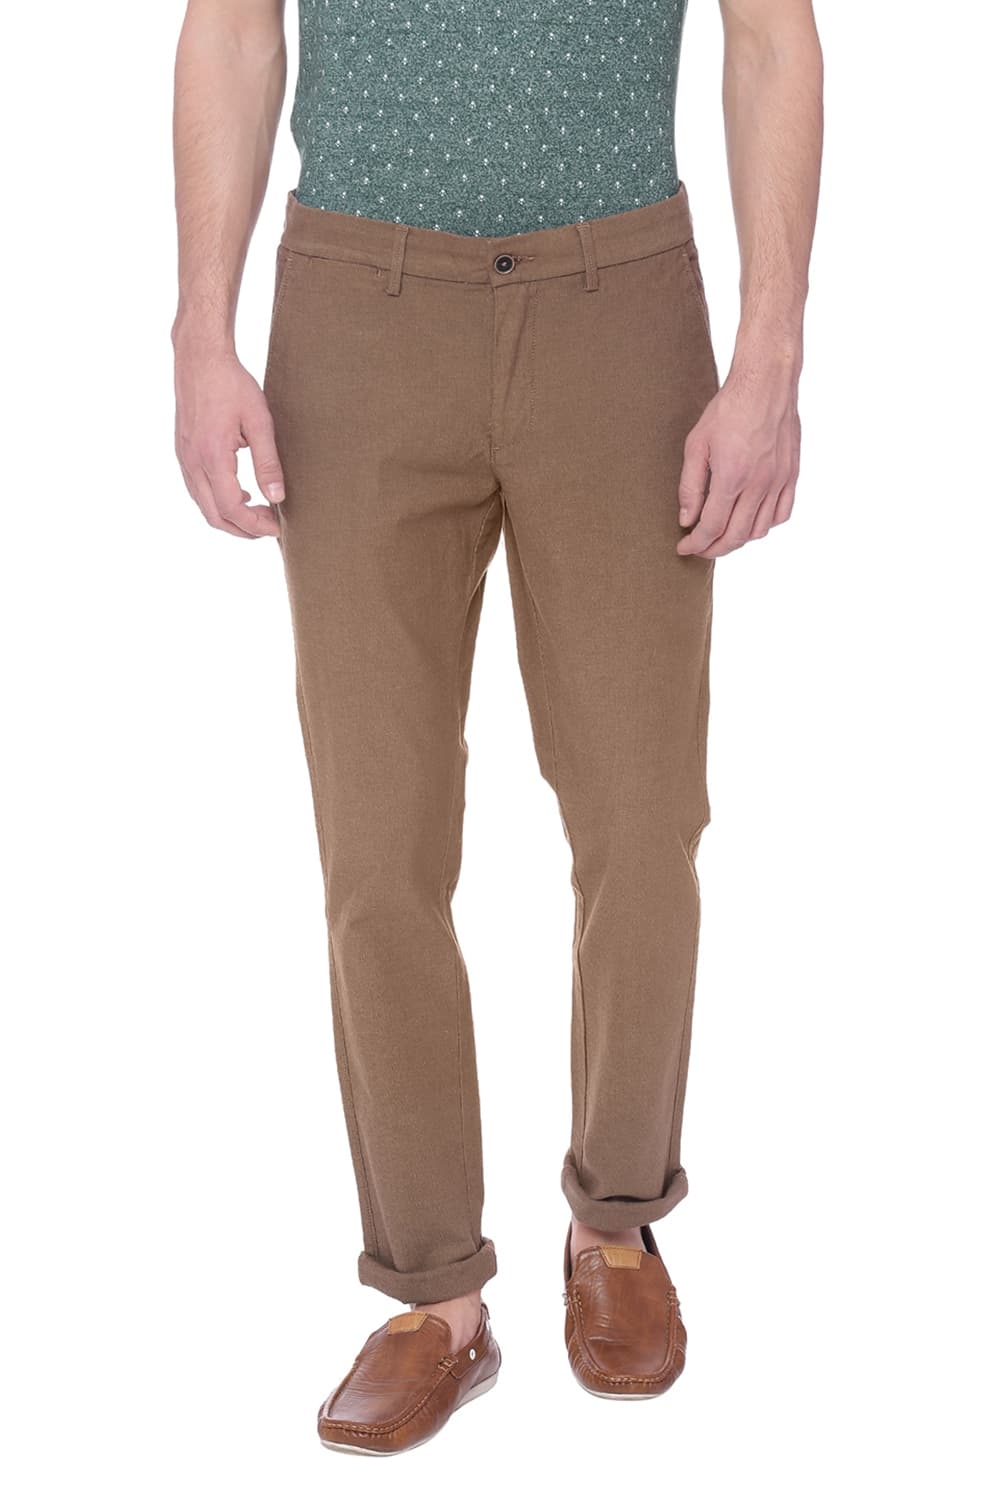 Basics | Basics Skinny Fit Antique Bronze Brown Stretch Trouser